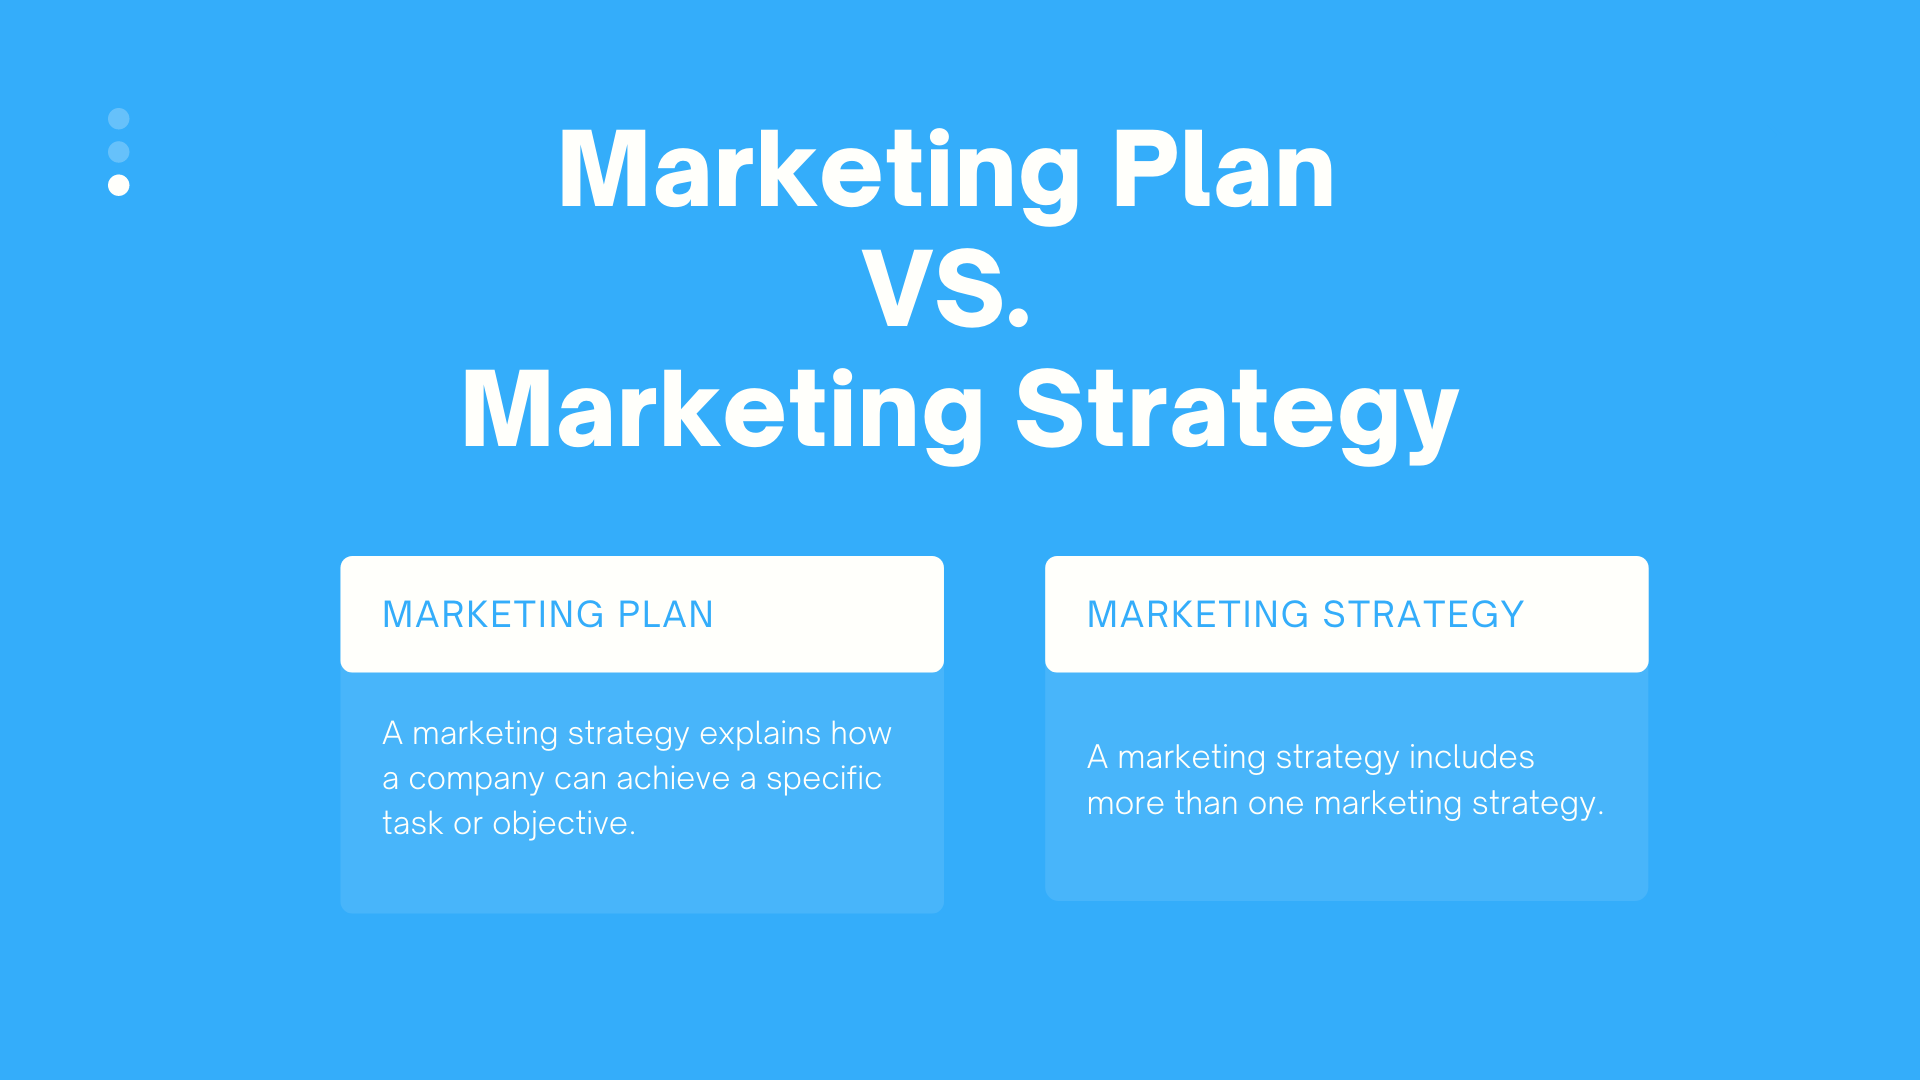 Marketing plan VS. Marketing strategy